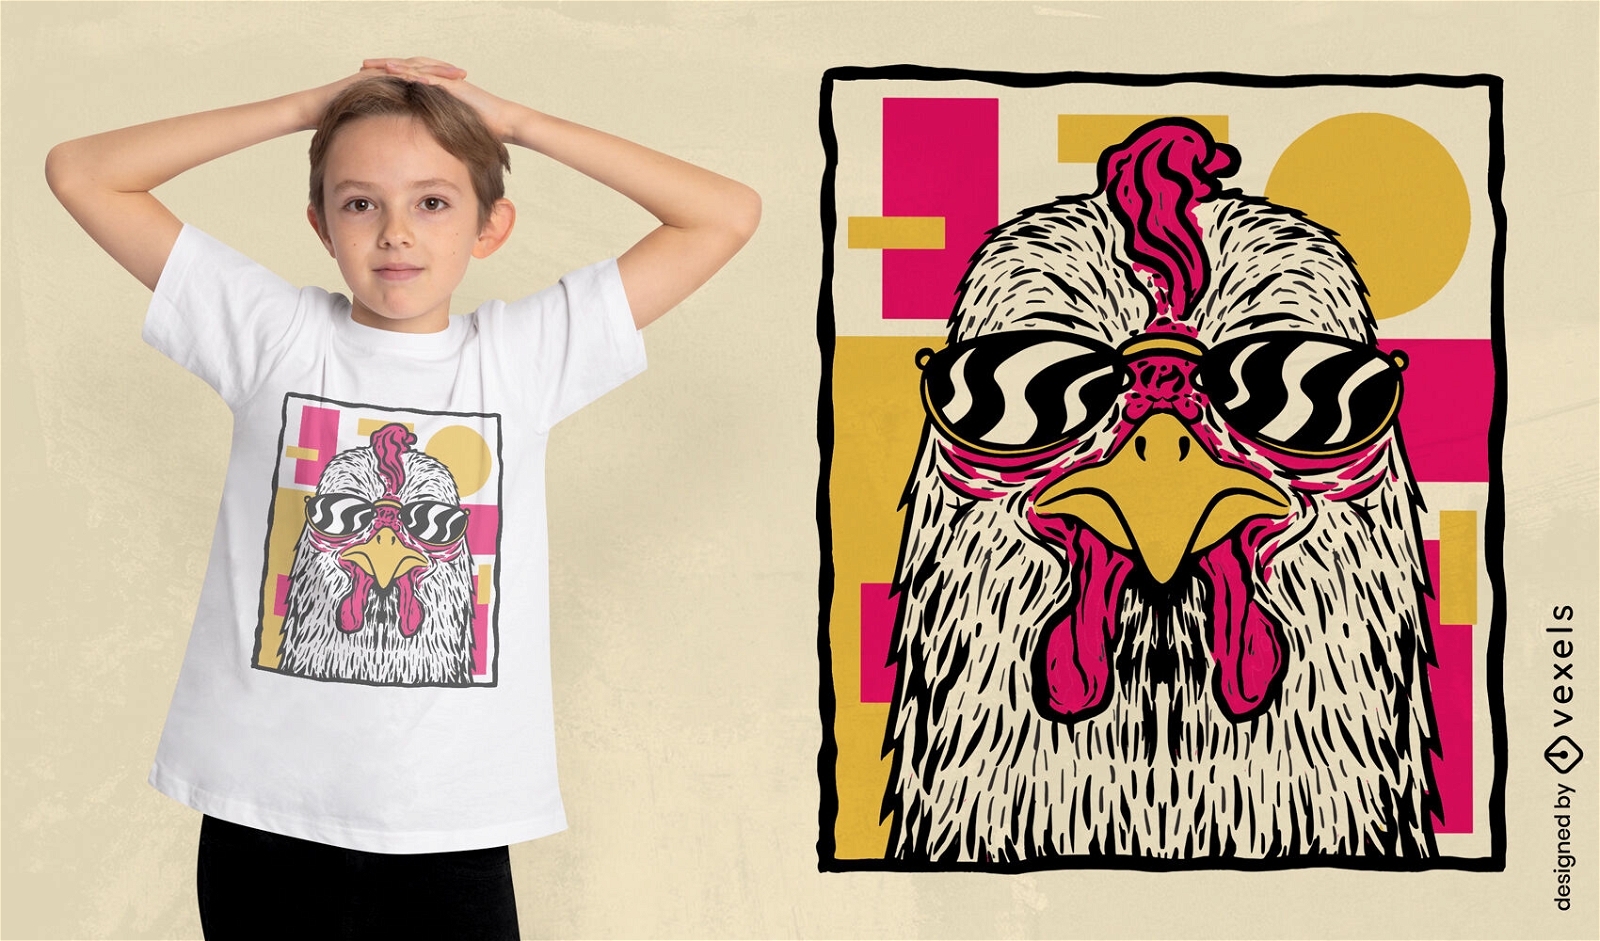 Chicken with sunglasses t-shirt design